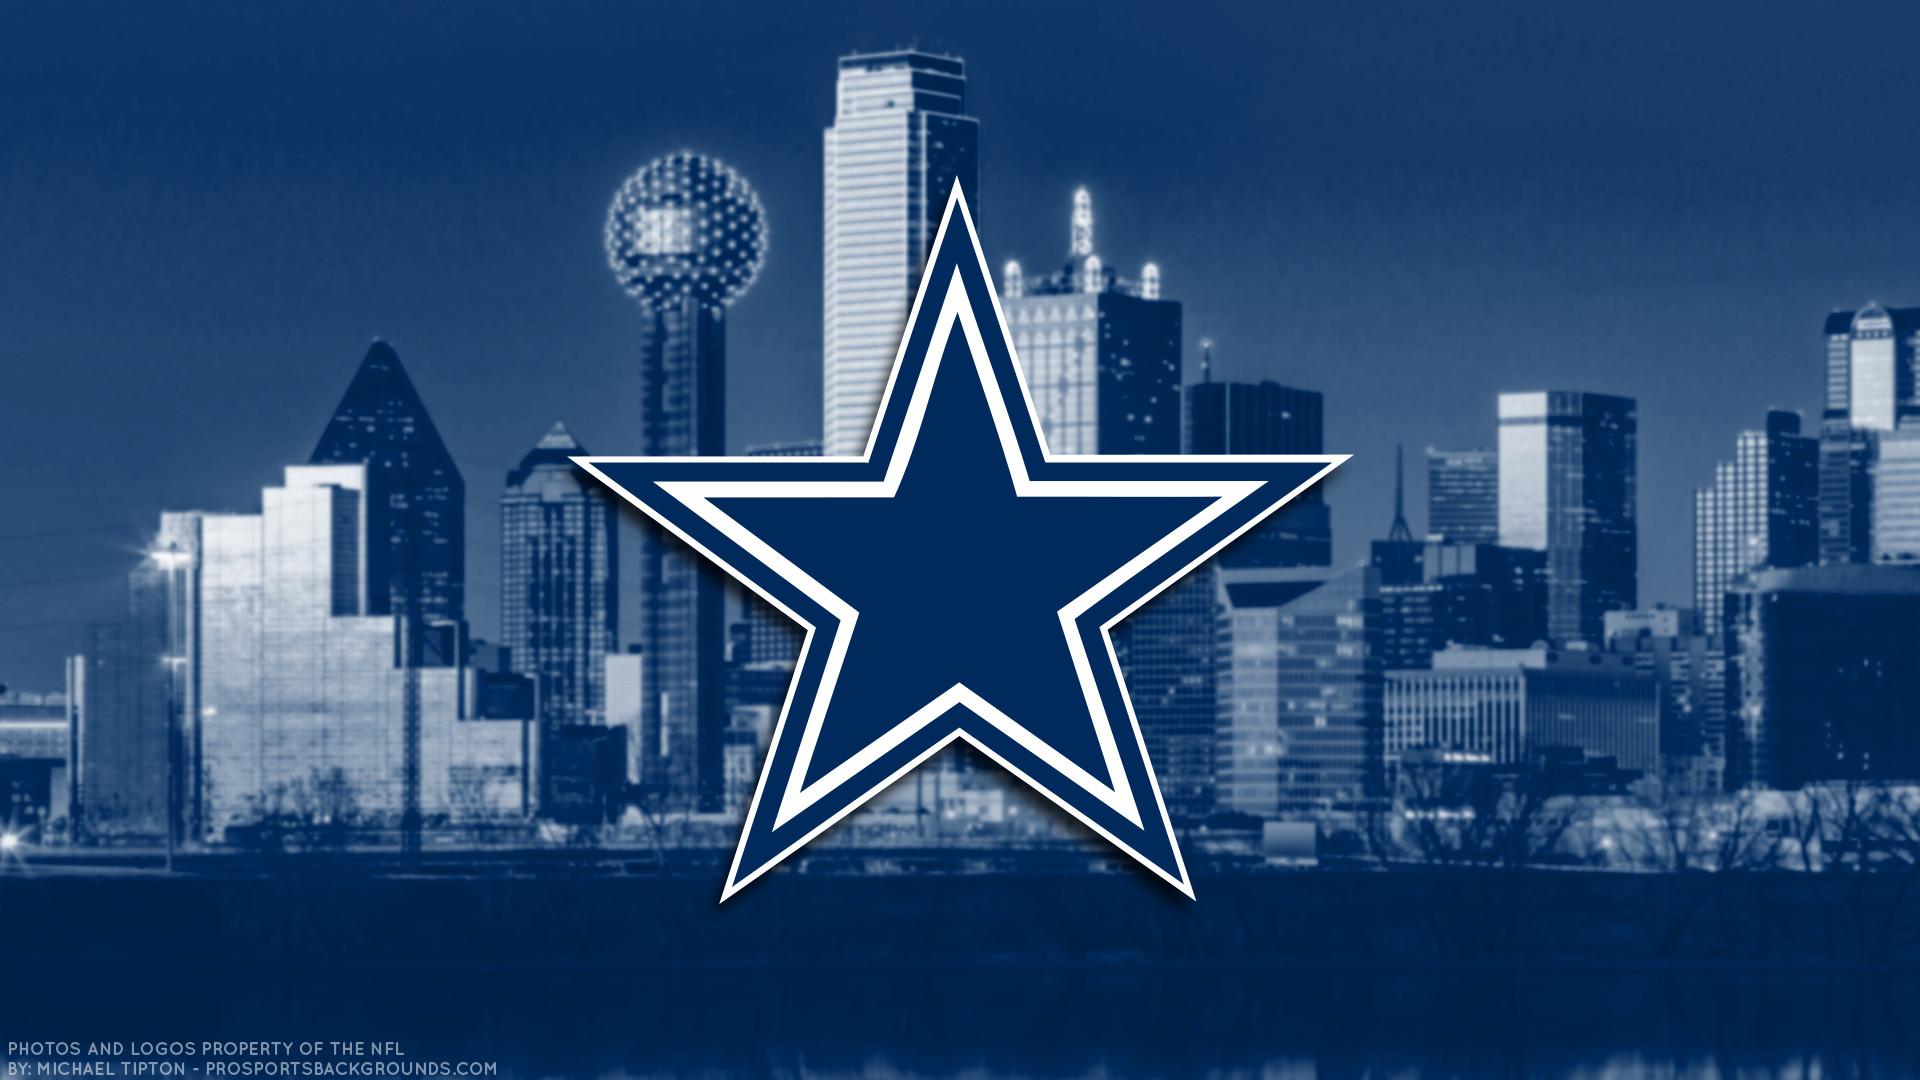 Dallas Cowboys Wallpaper background picture